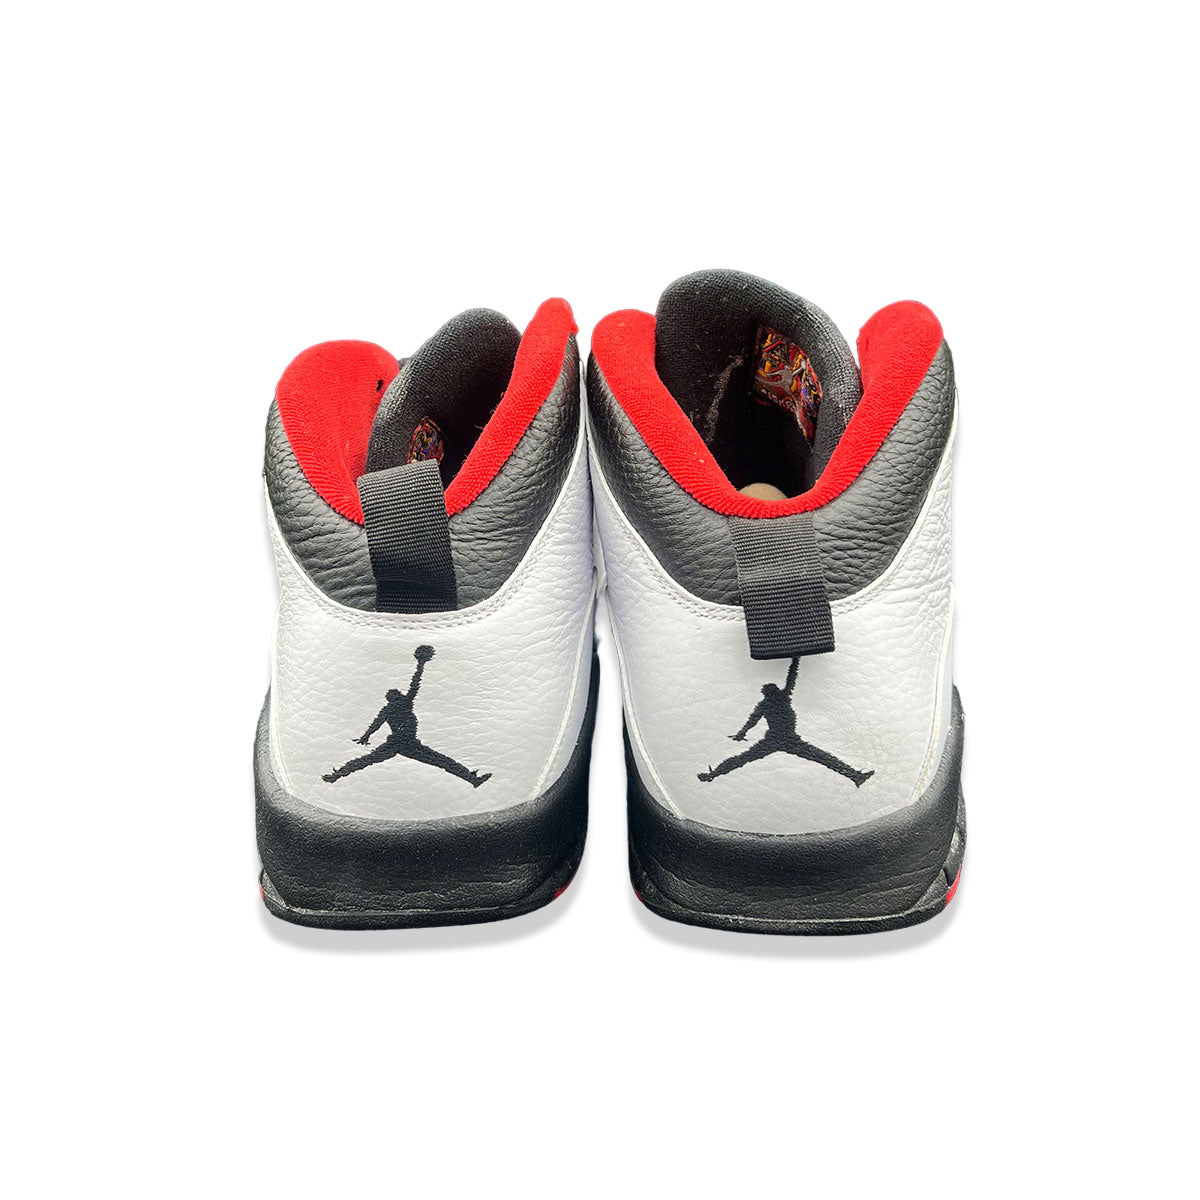 Air Jordan 10 Retro Double Nickel Size 13 (Pre-Owned)